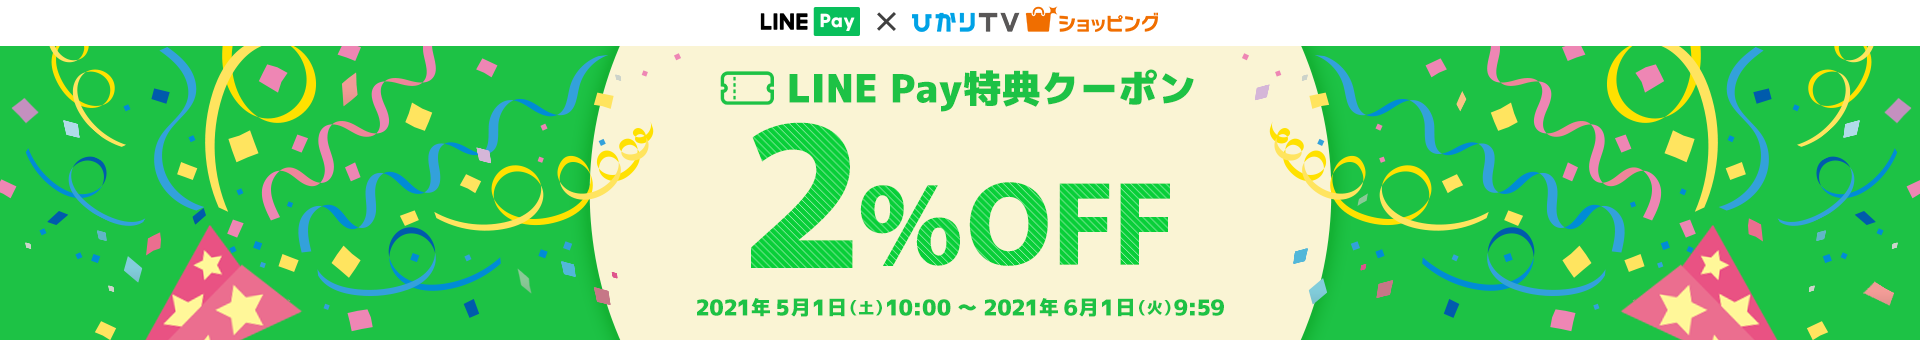 LINE Pay特典クーポン2%OFF